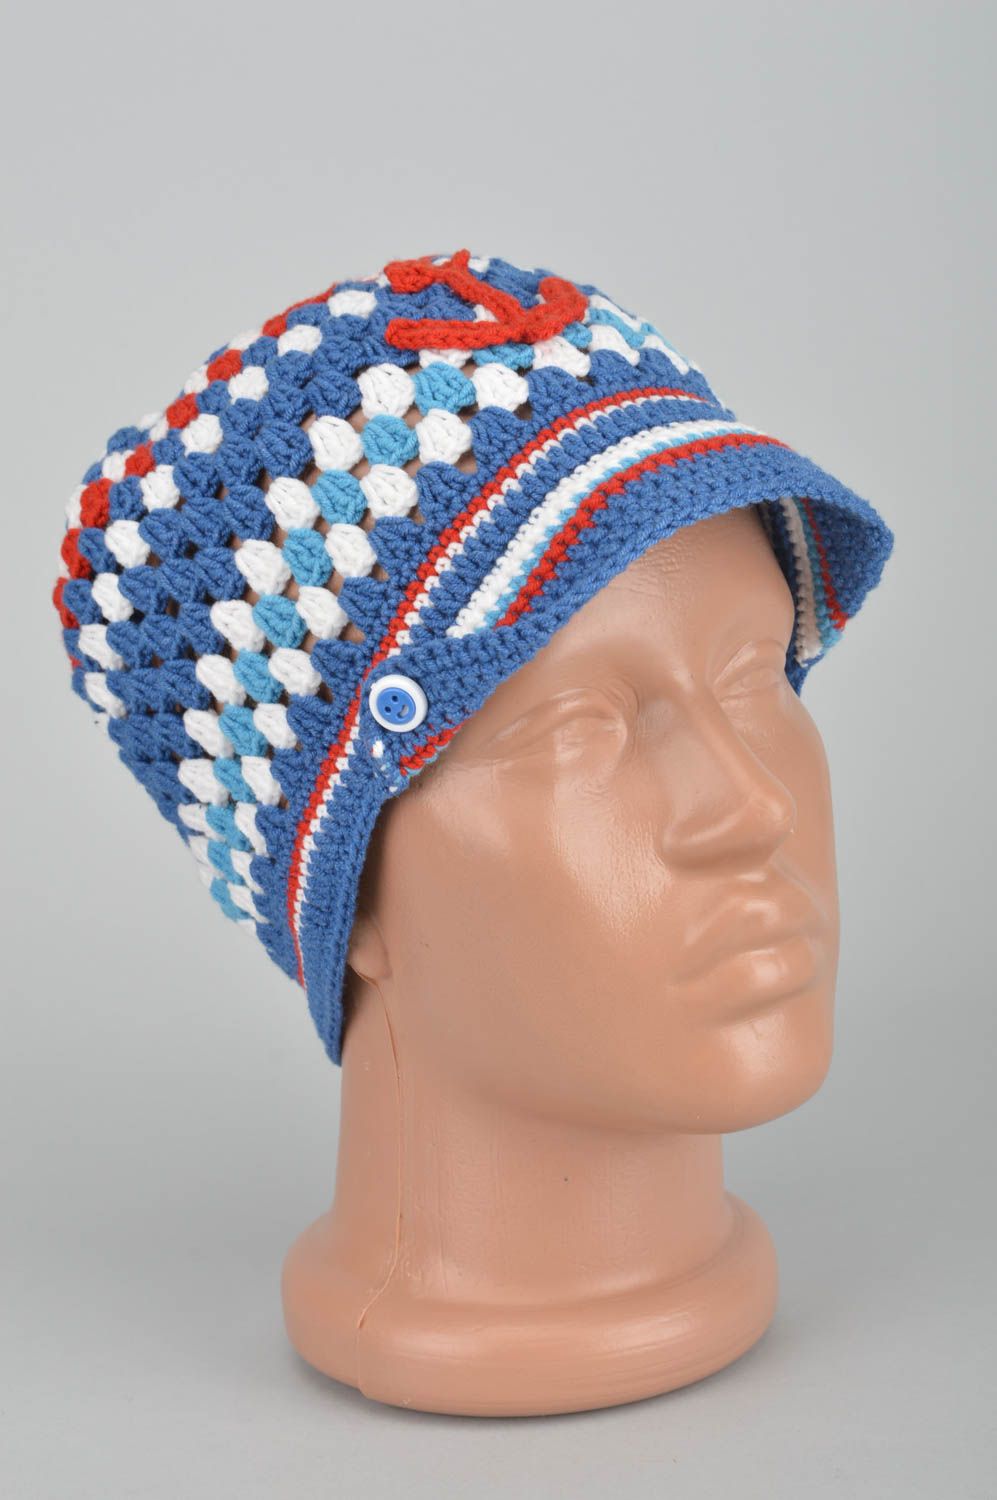 Beautiful handmade crochet hat crochet ideas gifts for him baby hat designs photo 5